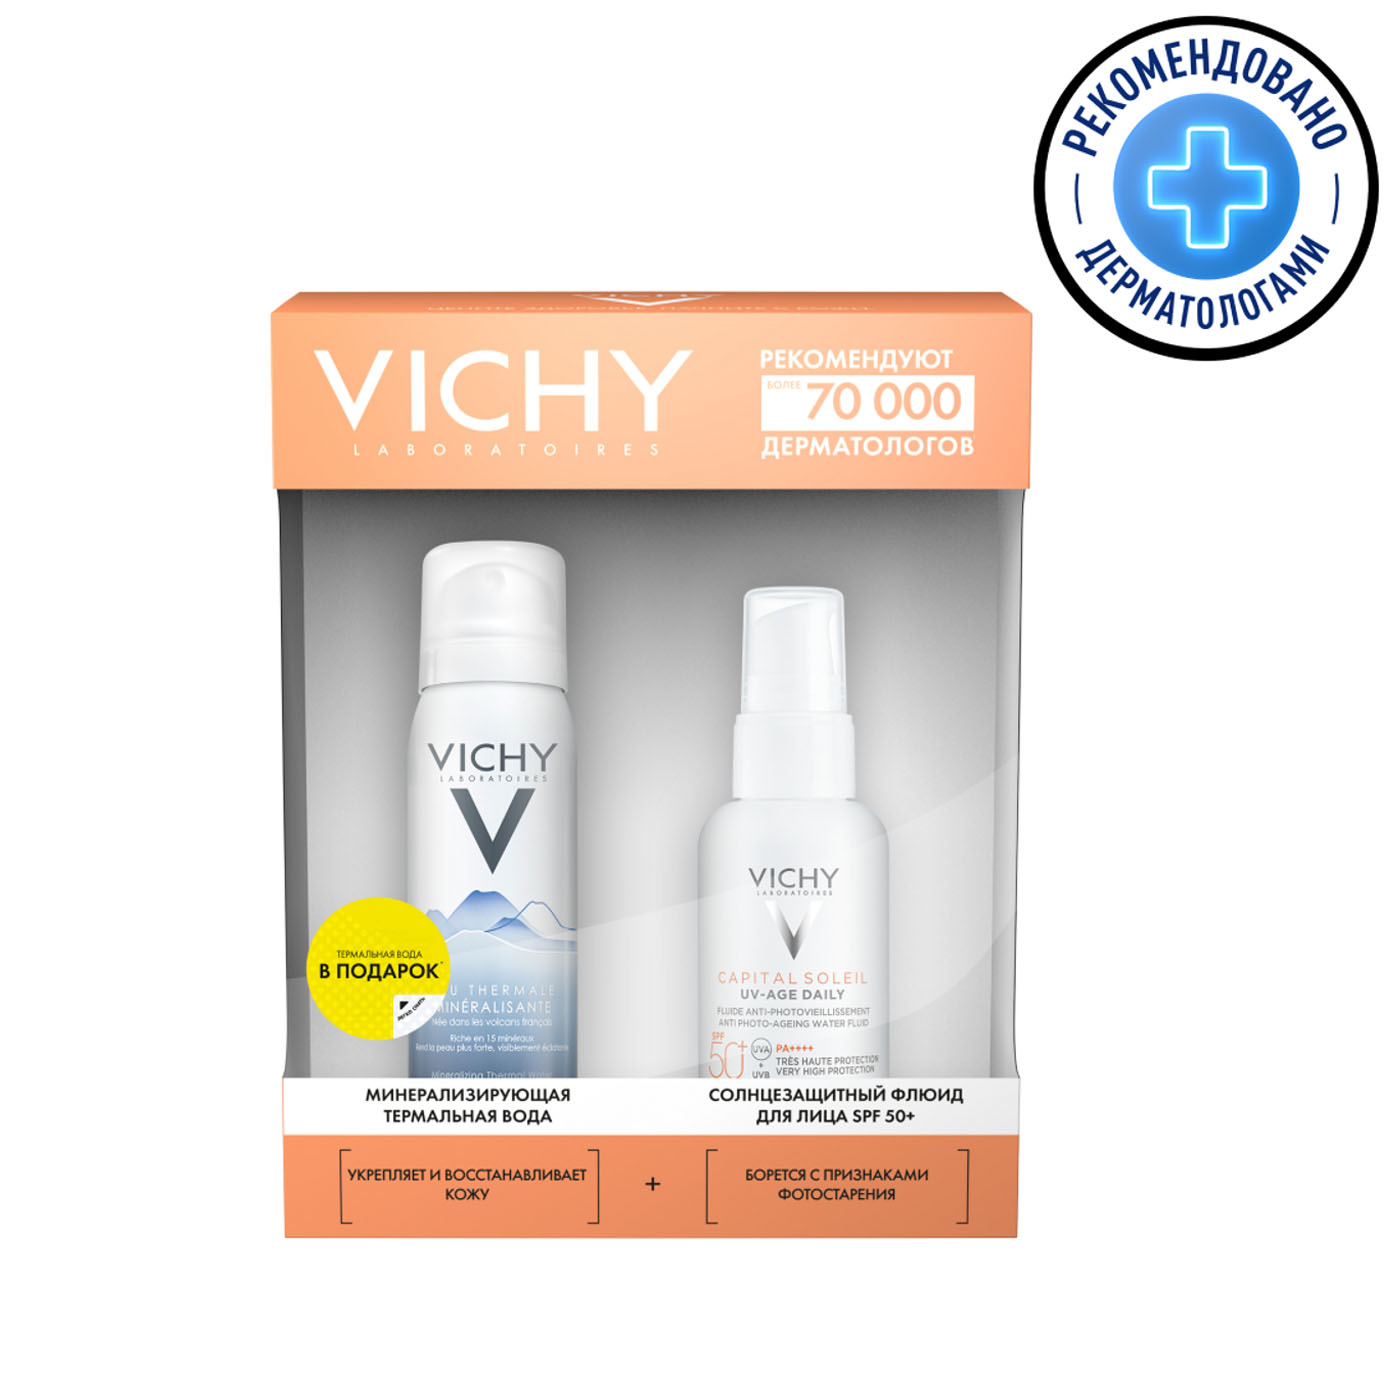 Vichy Подарочный набор: солнцезащитный флюид SPF50+ 40 мл + термальная вода 50 мл (Vichy, Capital Soleil) vichy вода термальная 50 мл